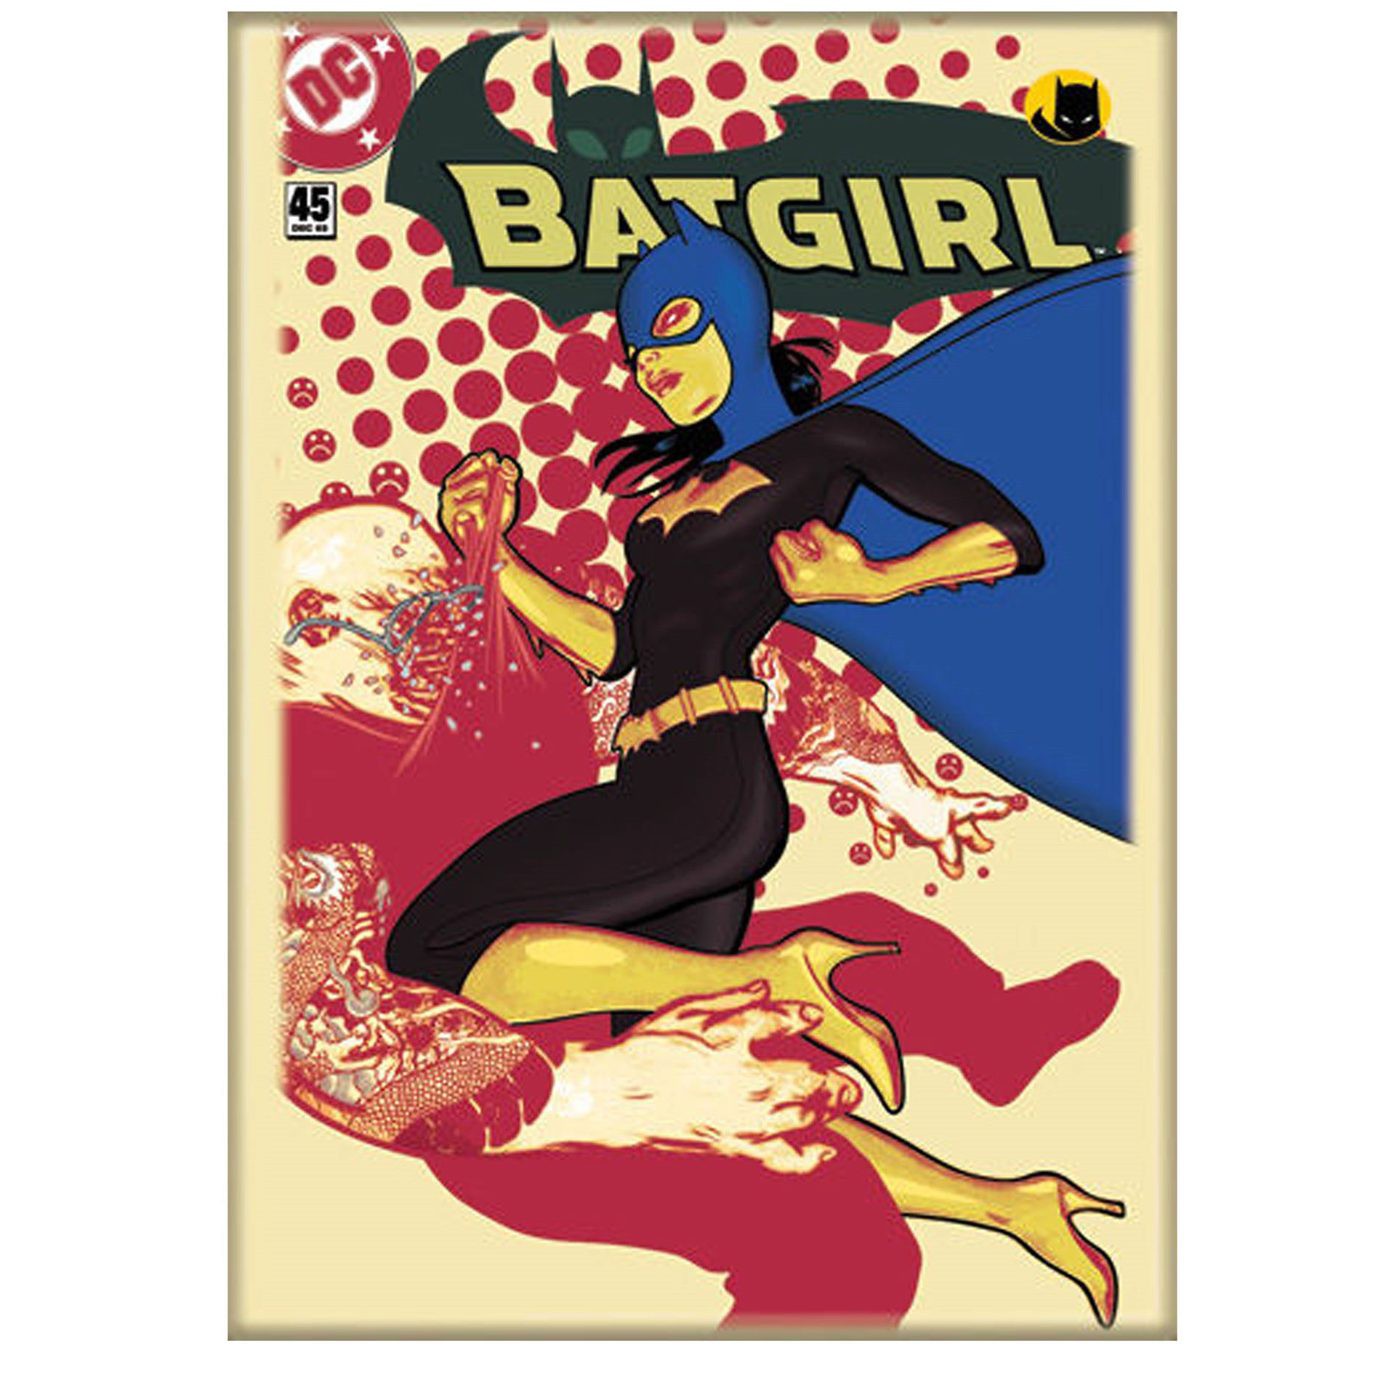 Batgirl #45 Cover Magnet